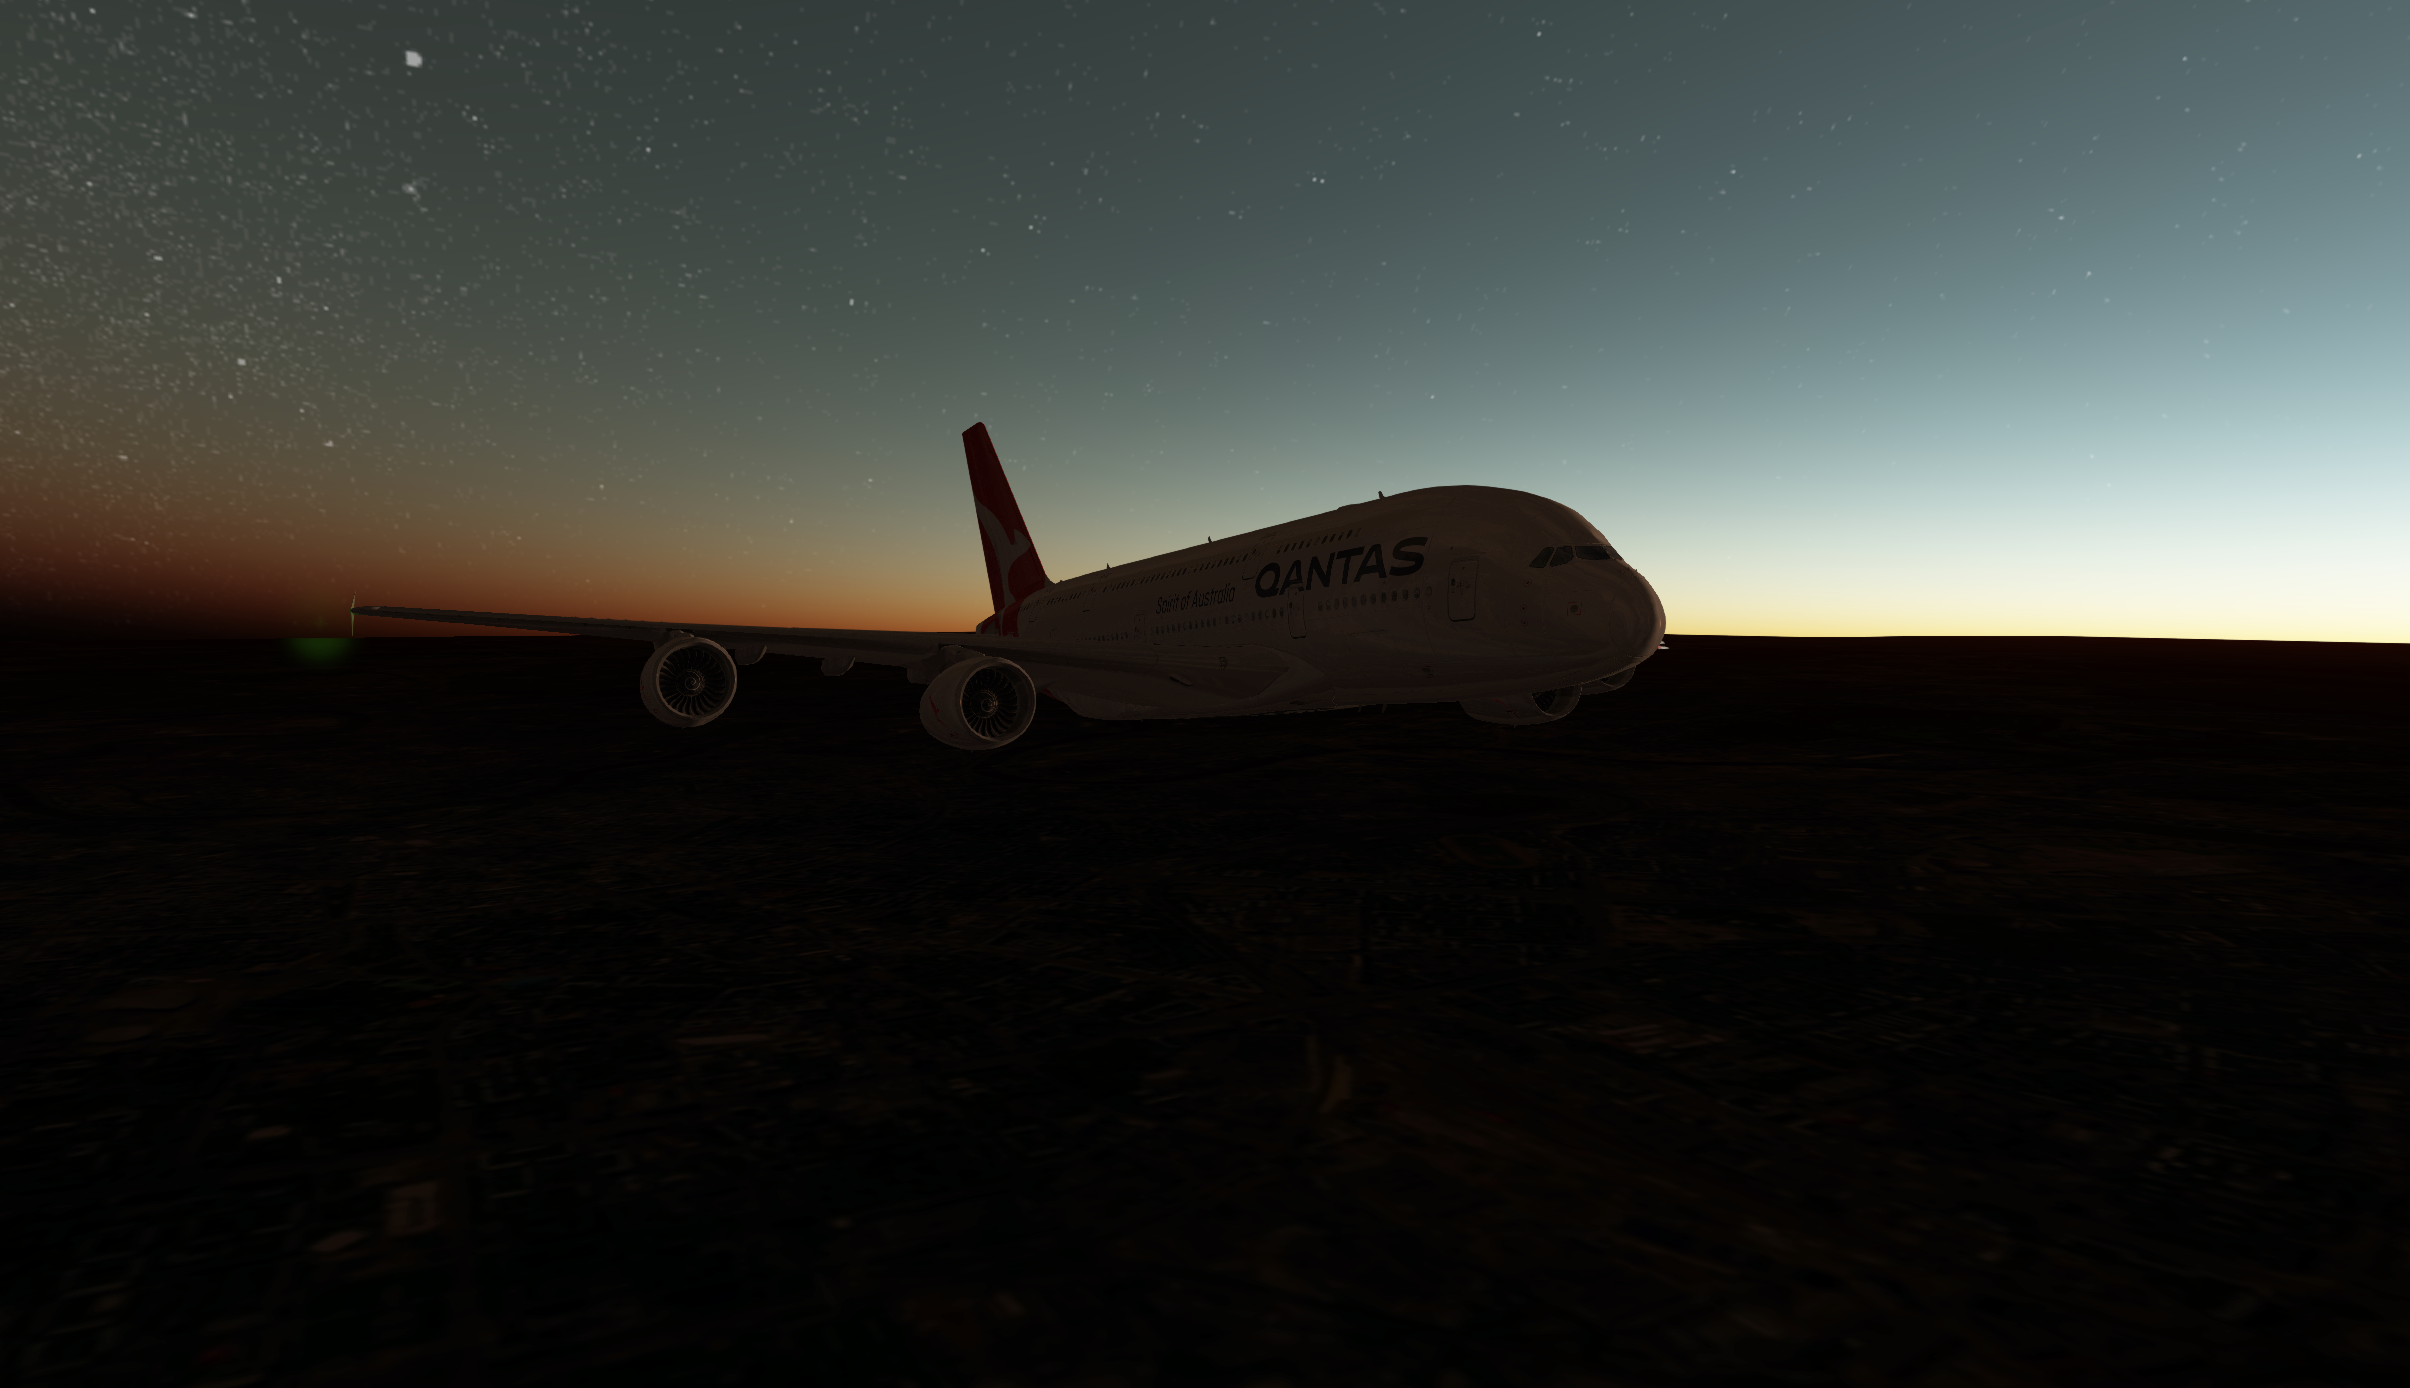 General 2410x1388 Airbus A380 Airbus flying flight simulator sky Qantas Airways airplane sunset screen shot vehicle PC gaming